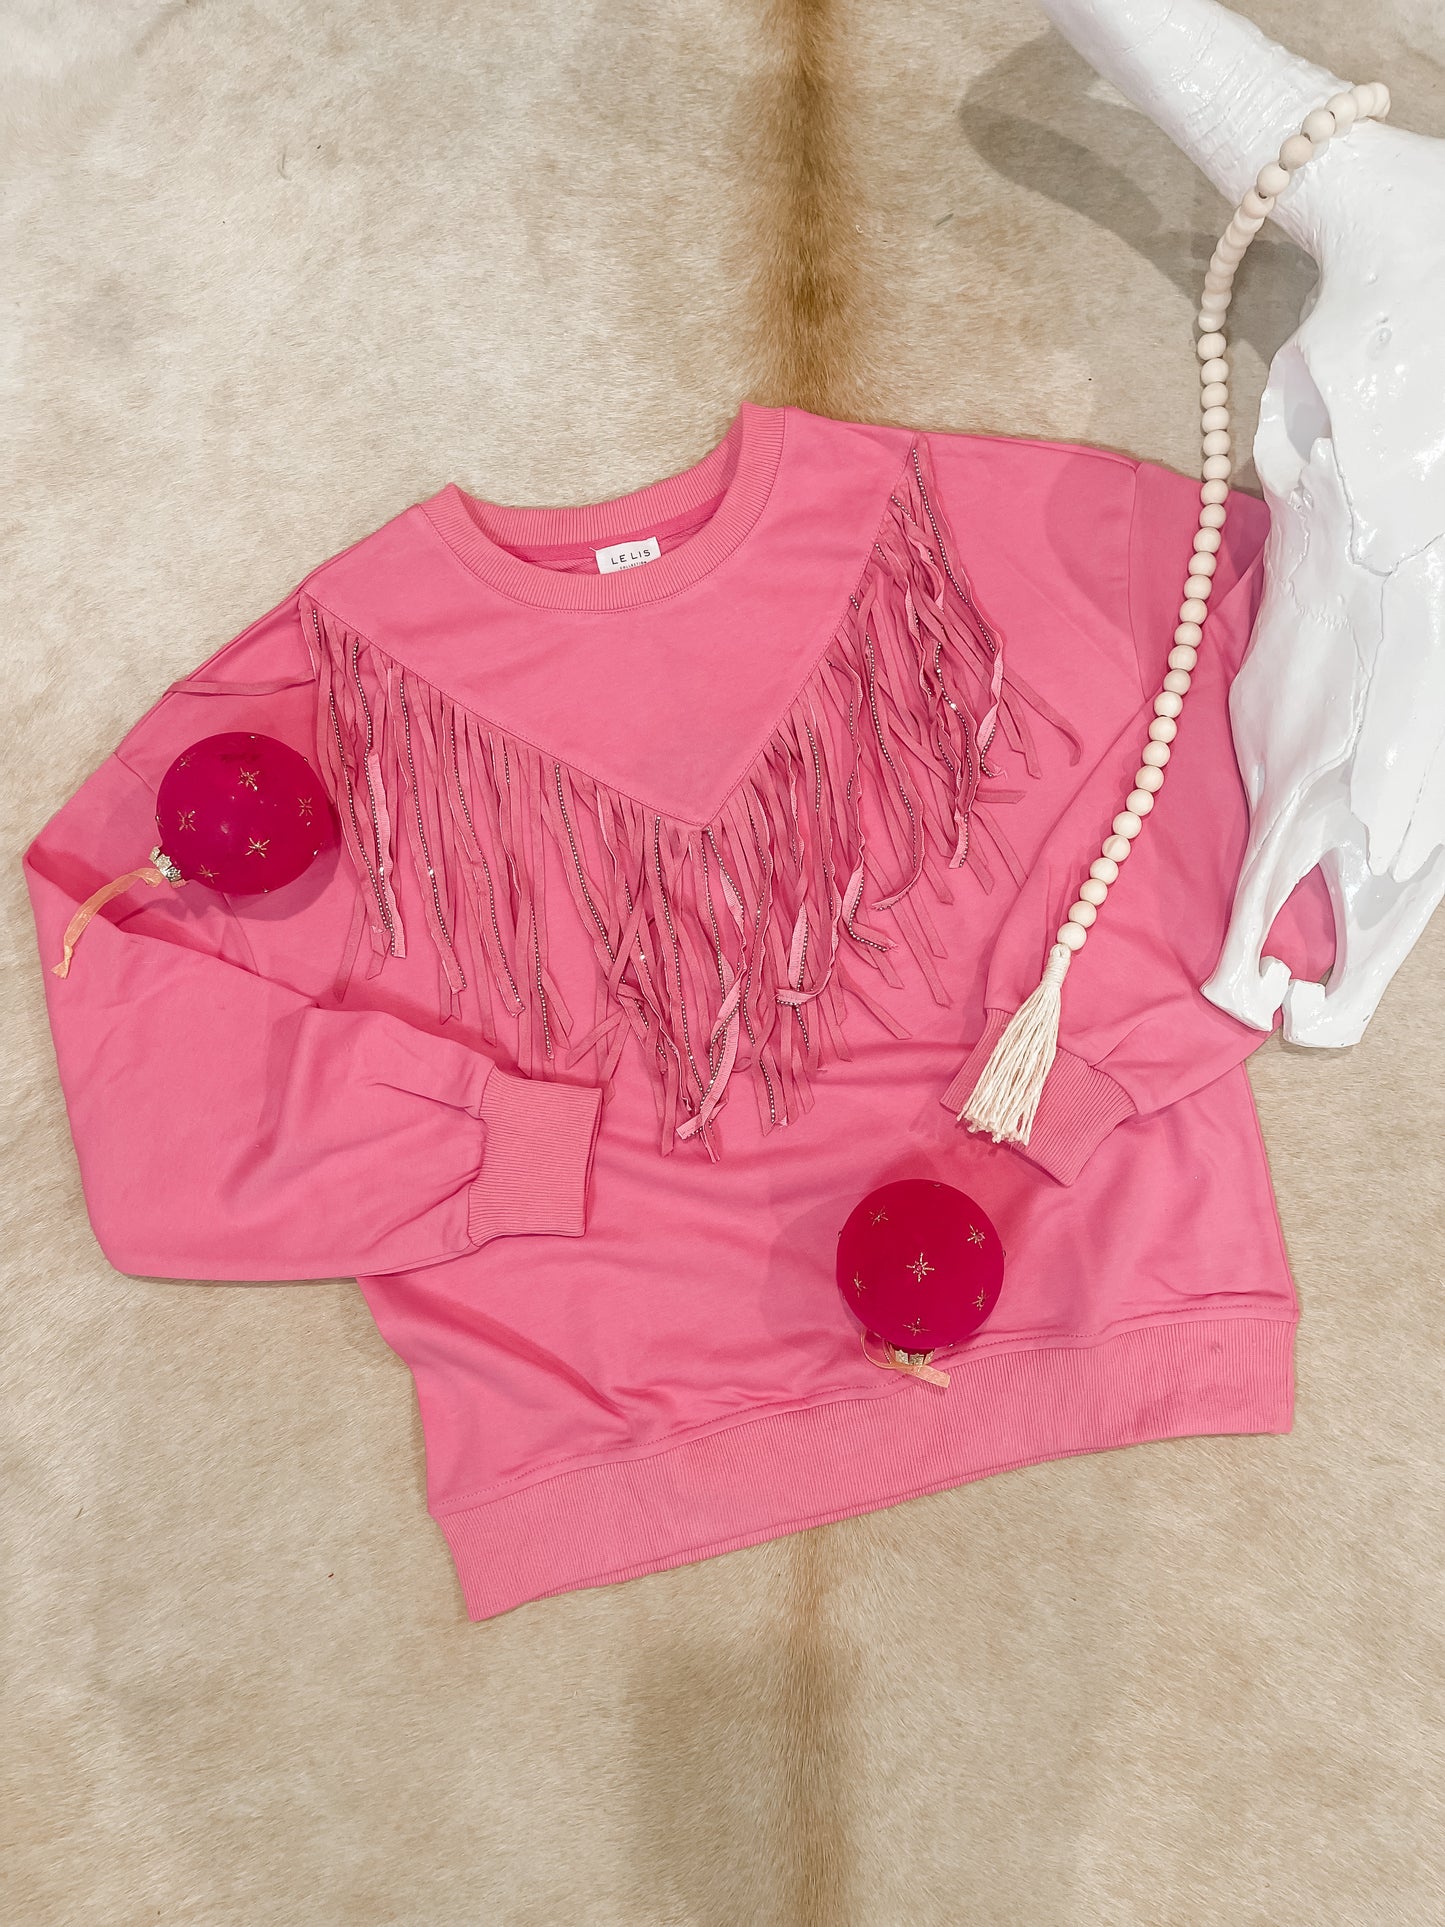 Pink Is Always The Way Fringe Sweatshirt